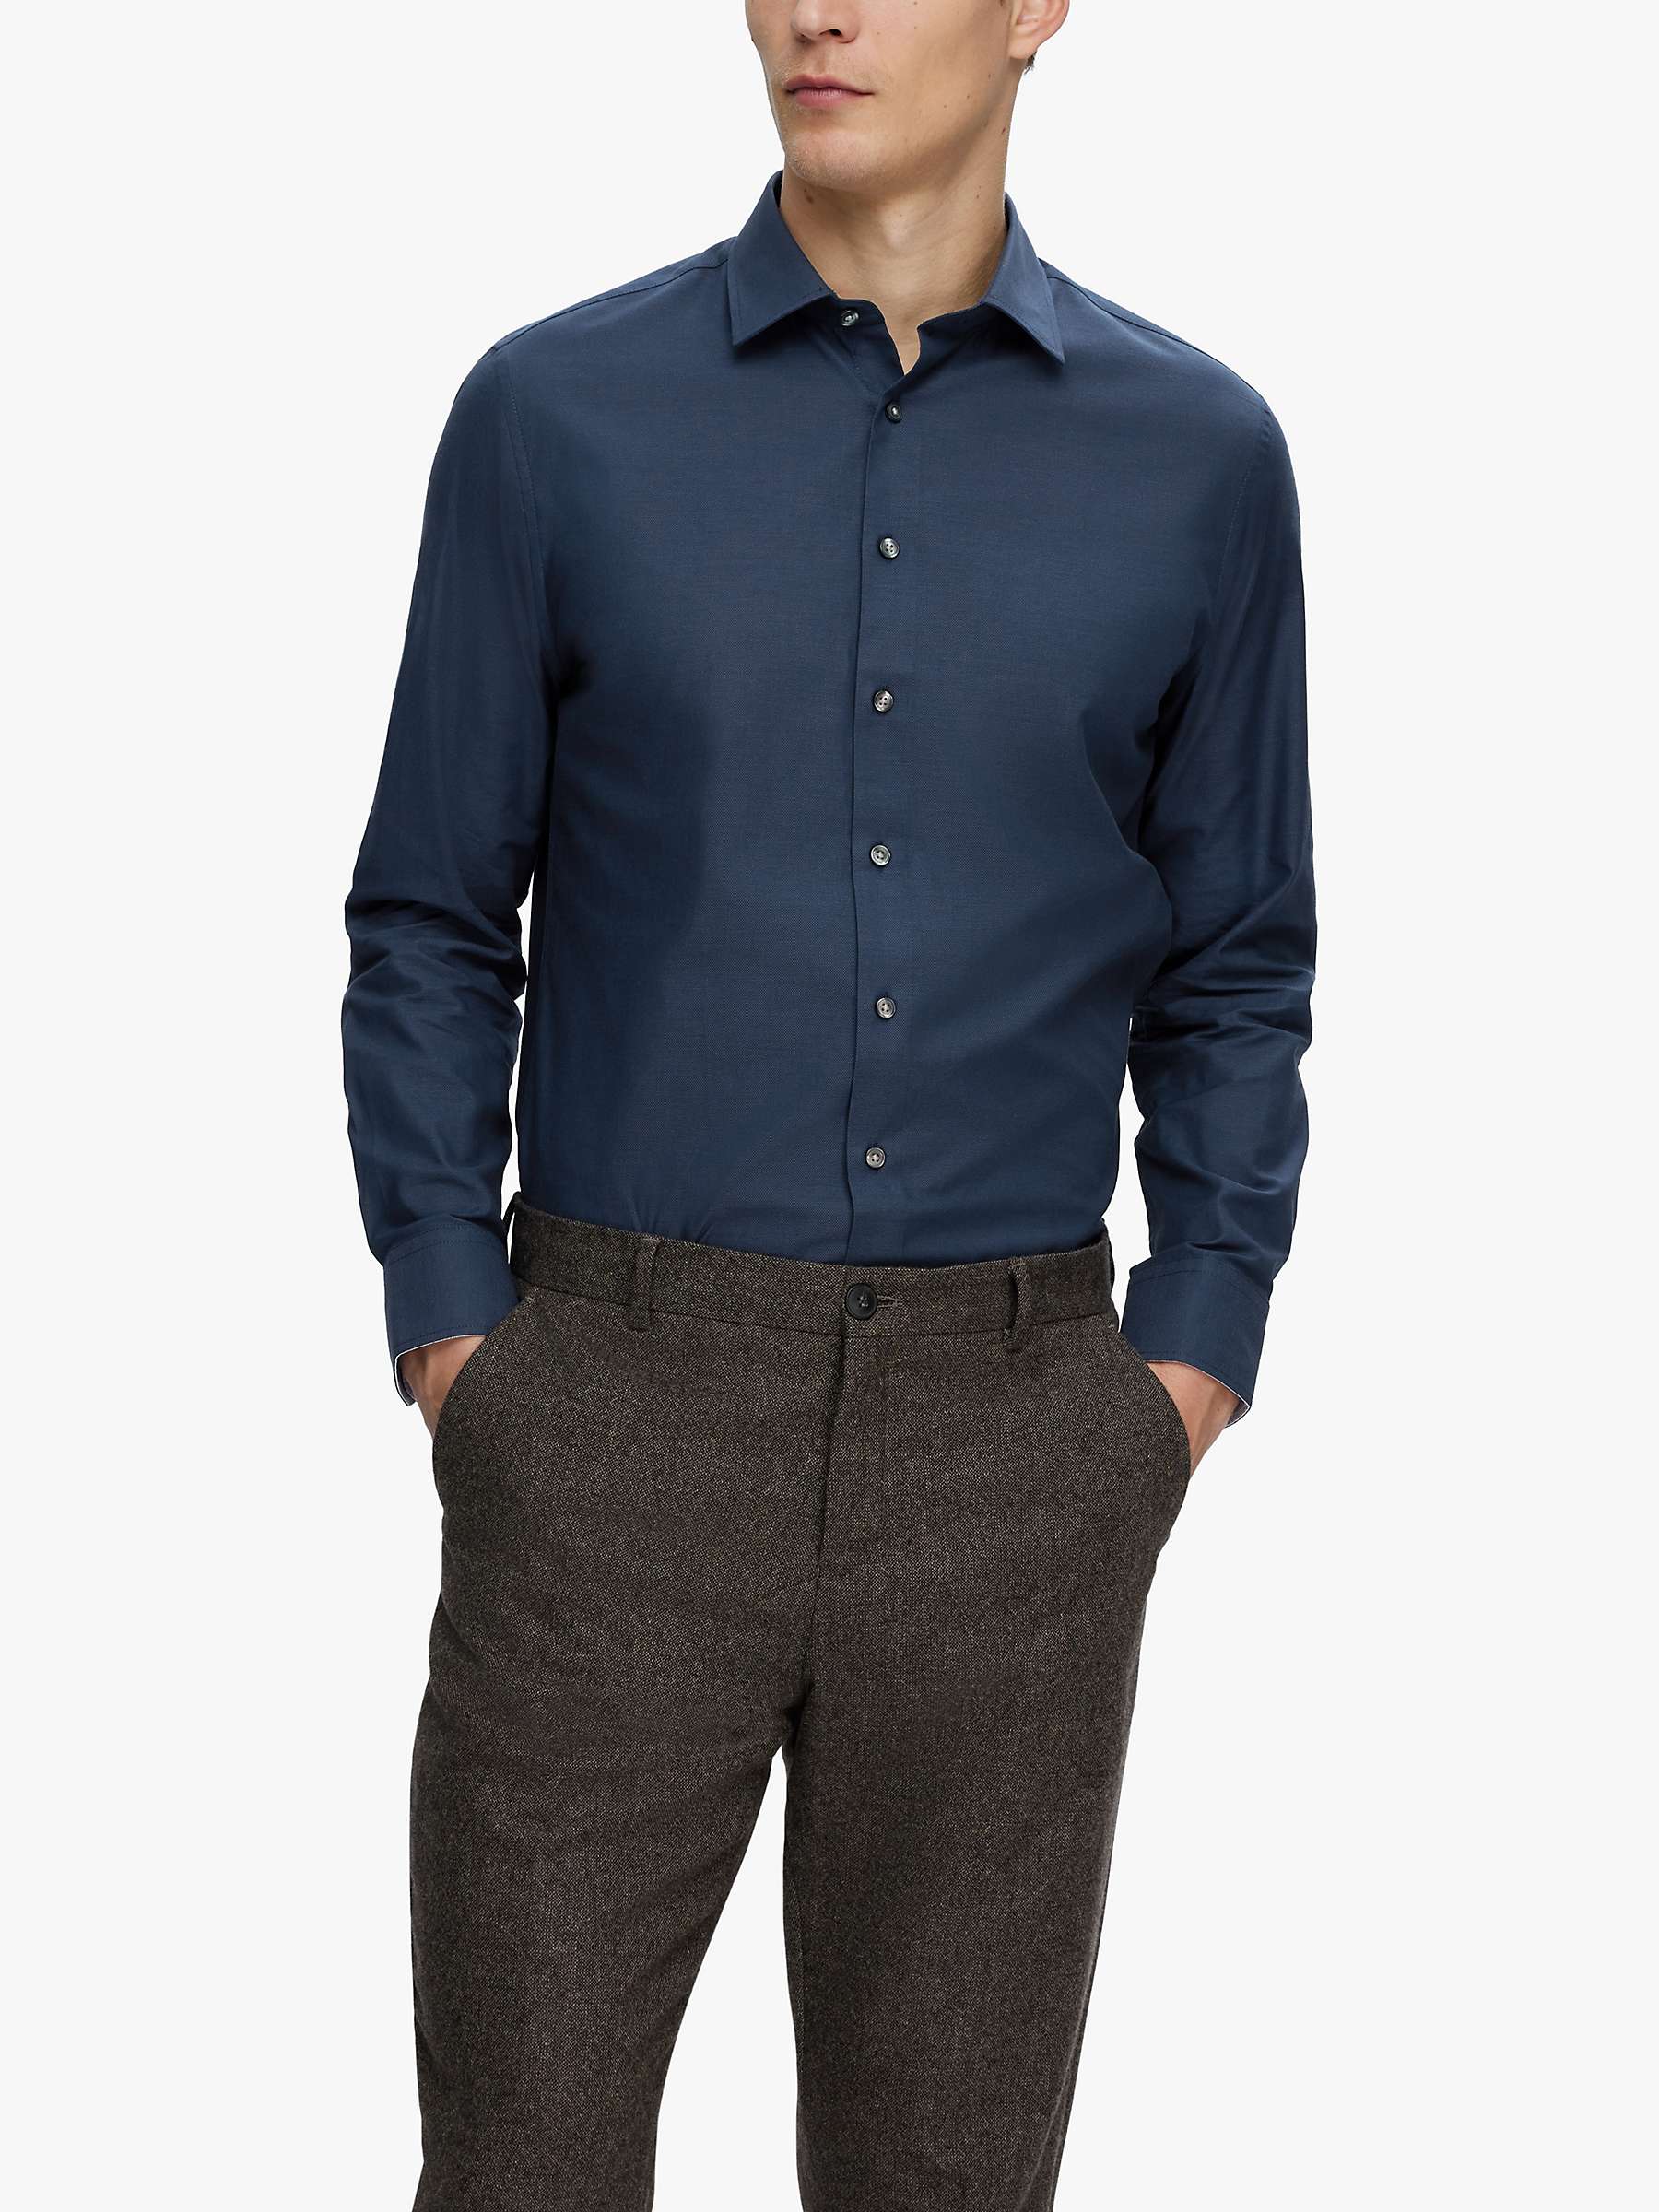 Buy SELECTED HOMME Slim Fit Long Sleeve Shirt, Navy Online at johnlewis.com